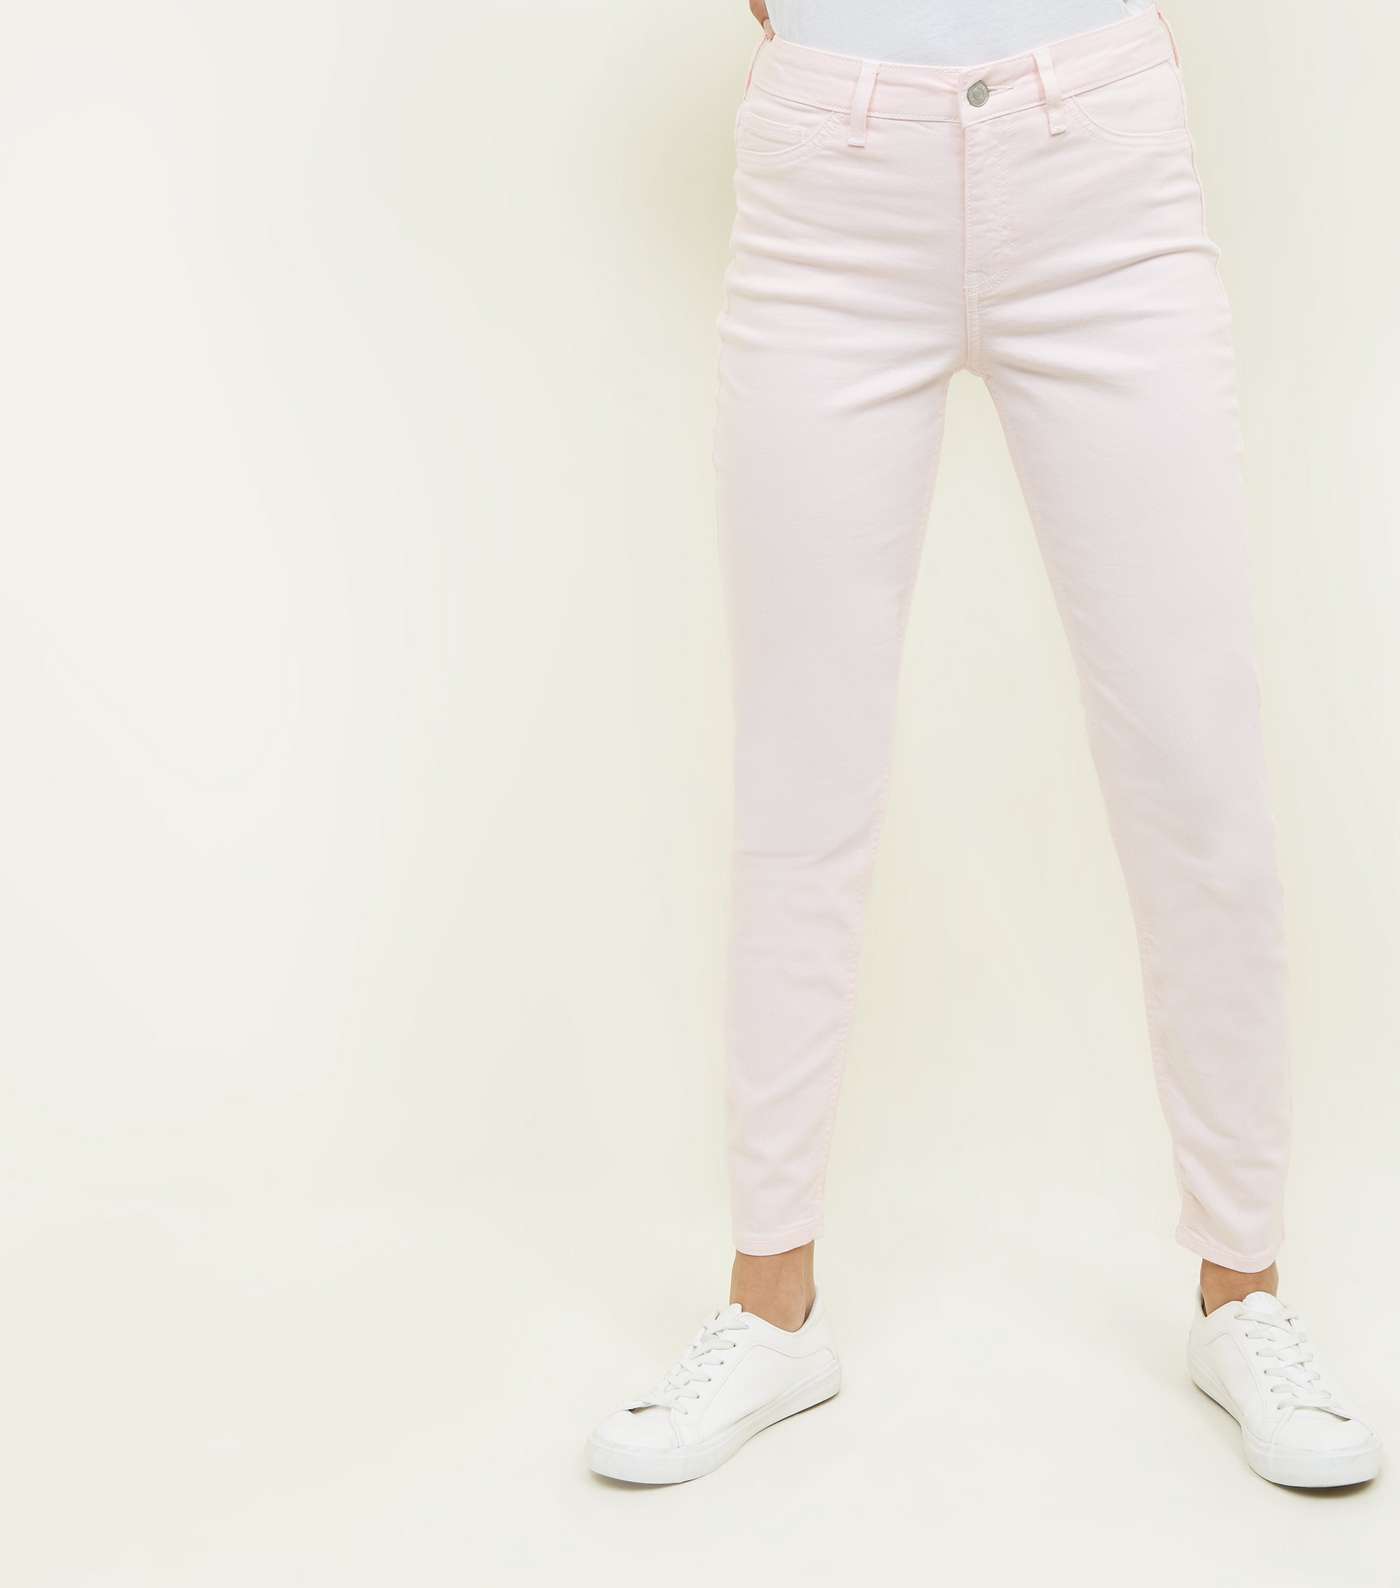 Pink Ankle Grazer Skinny Jenna Jeans Image 2